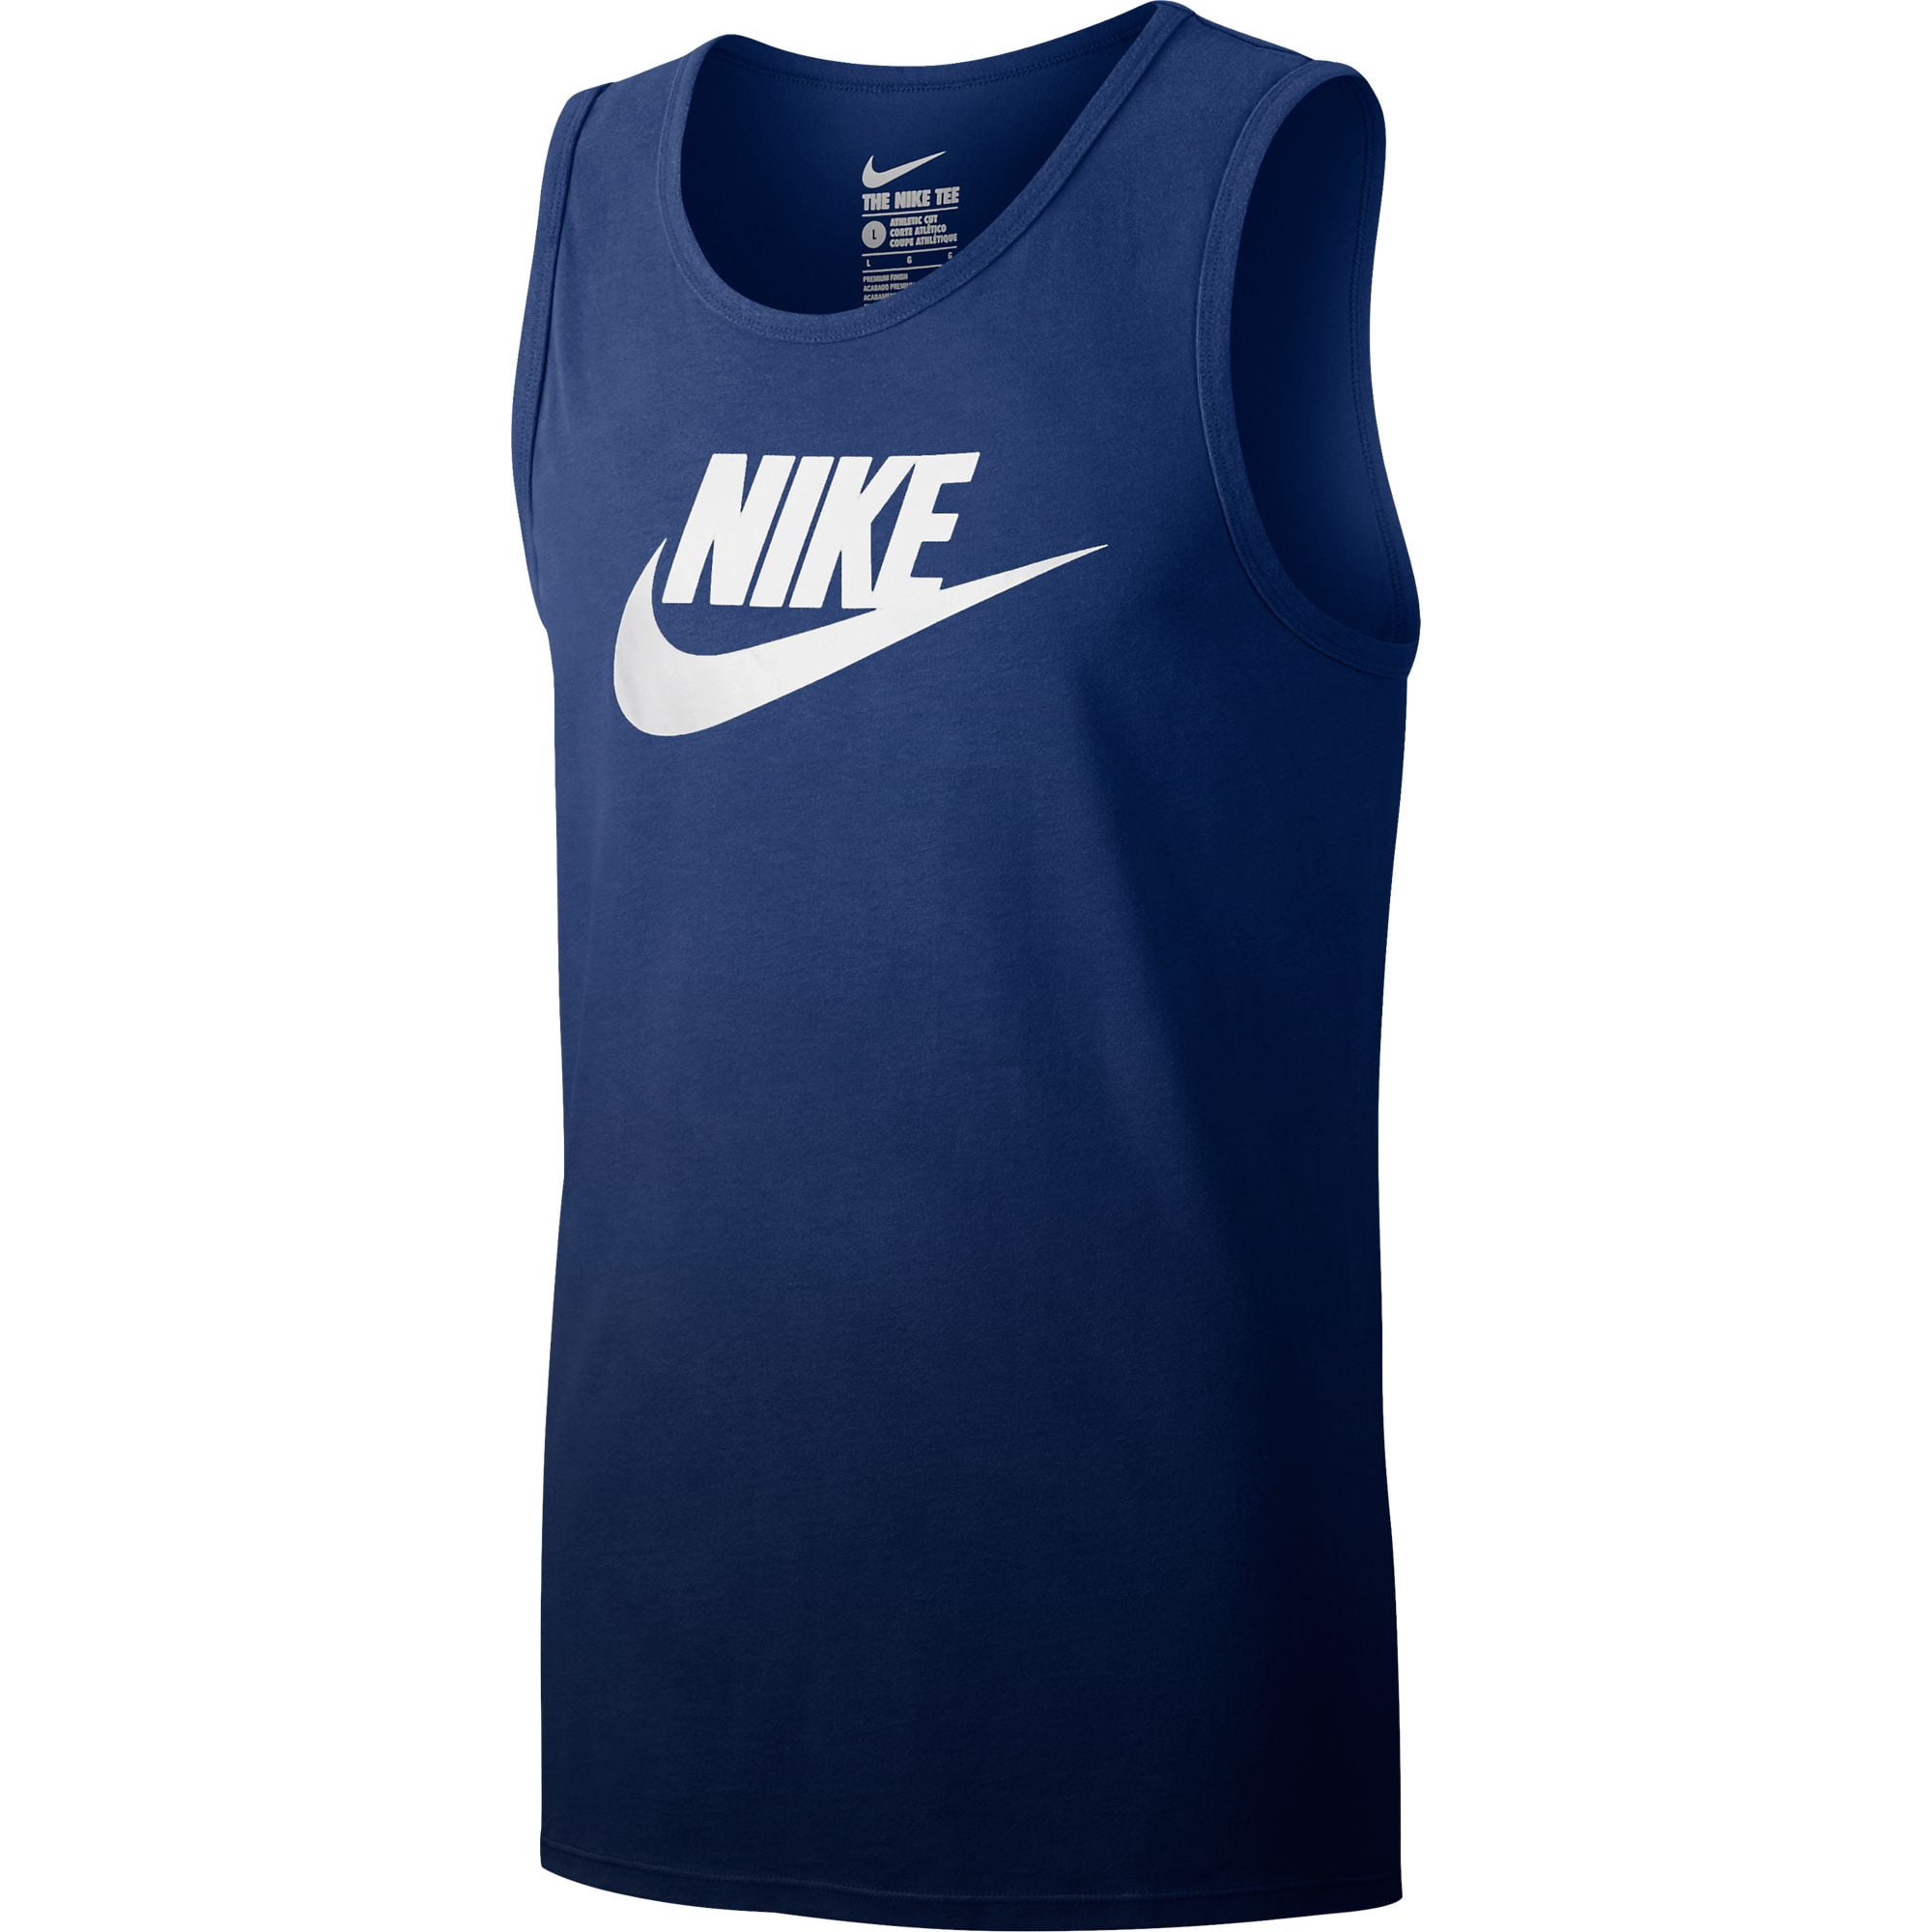 Nike Air Hybrid Men's T-Shirt Black/Grey/Volt 729833-455 - Walmart.com